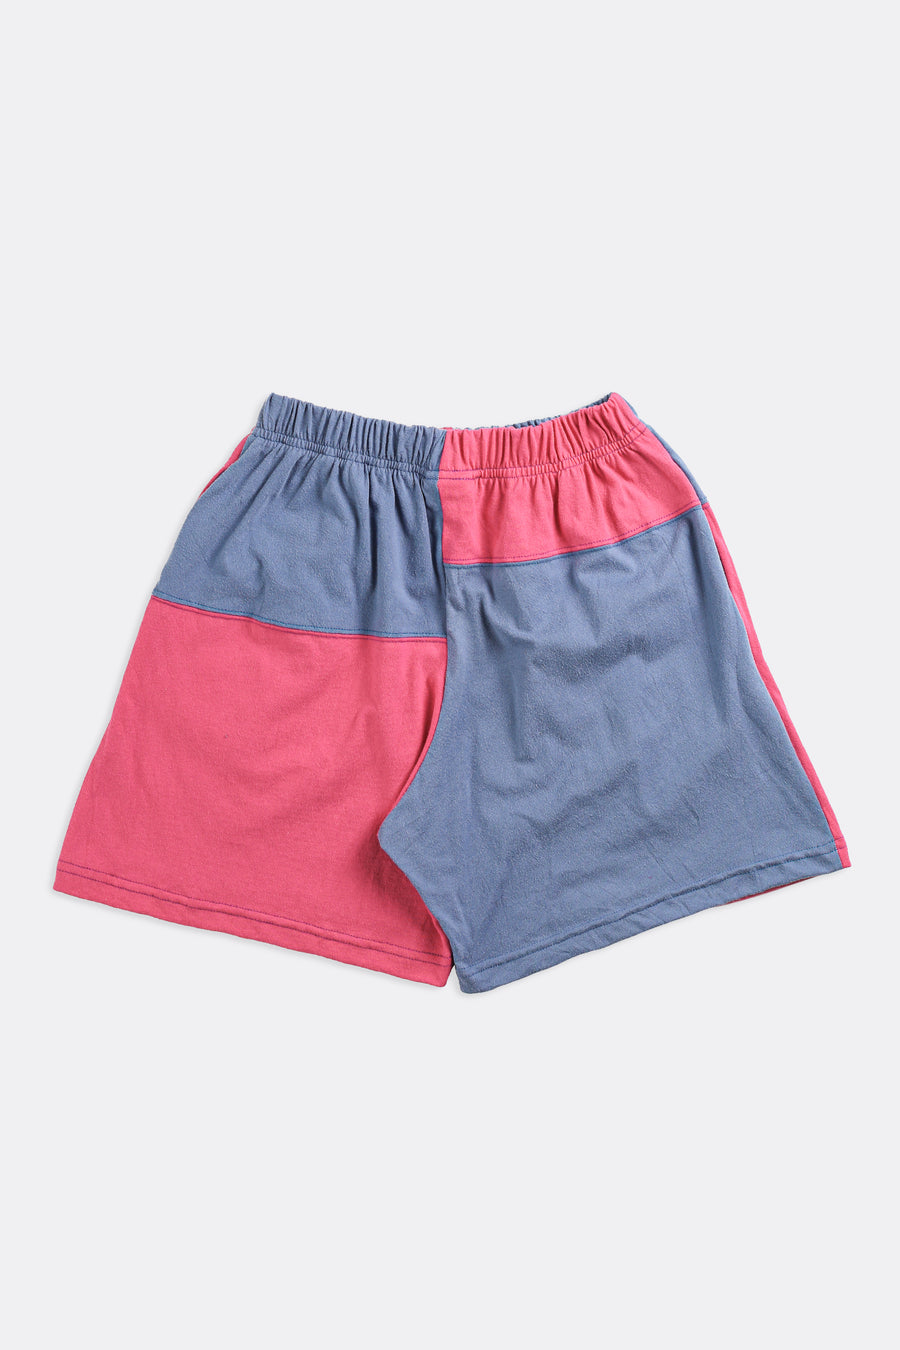 Unisex Rework Patchwork Tee Shorts - Women's XS, Men's XXS